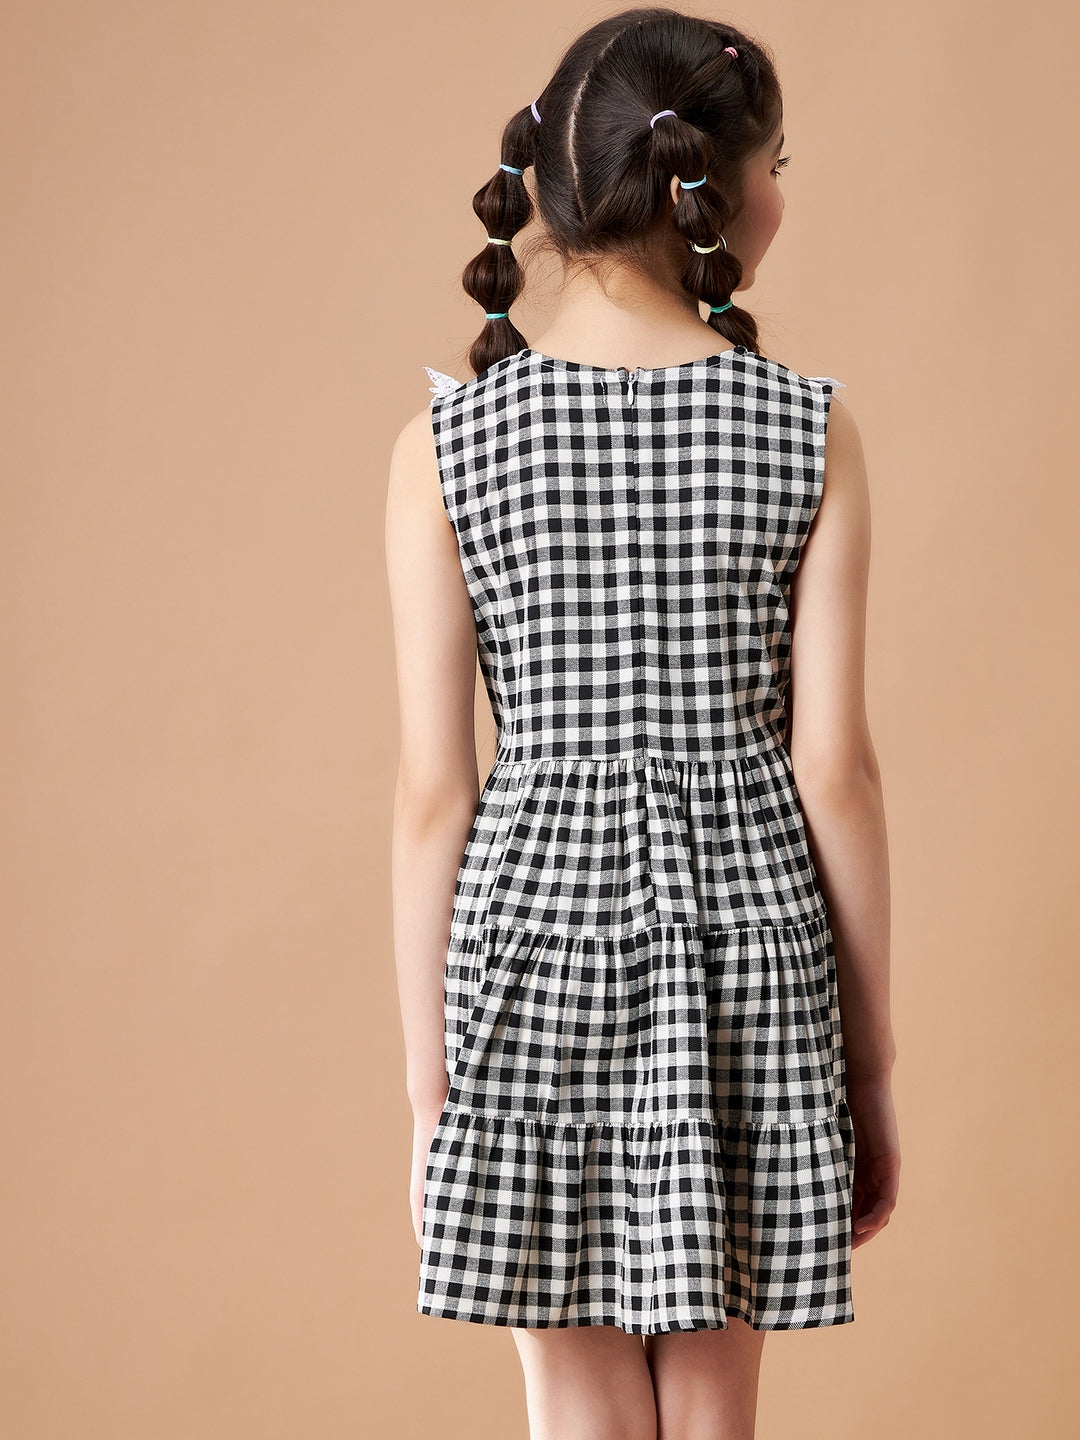 Eavan Girls Black Self Design Short Dress | eavan